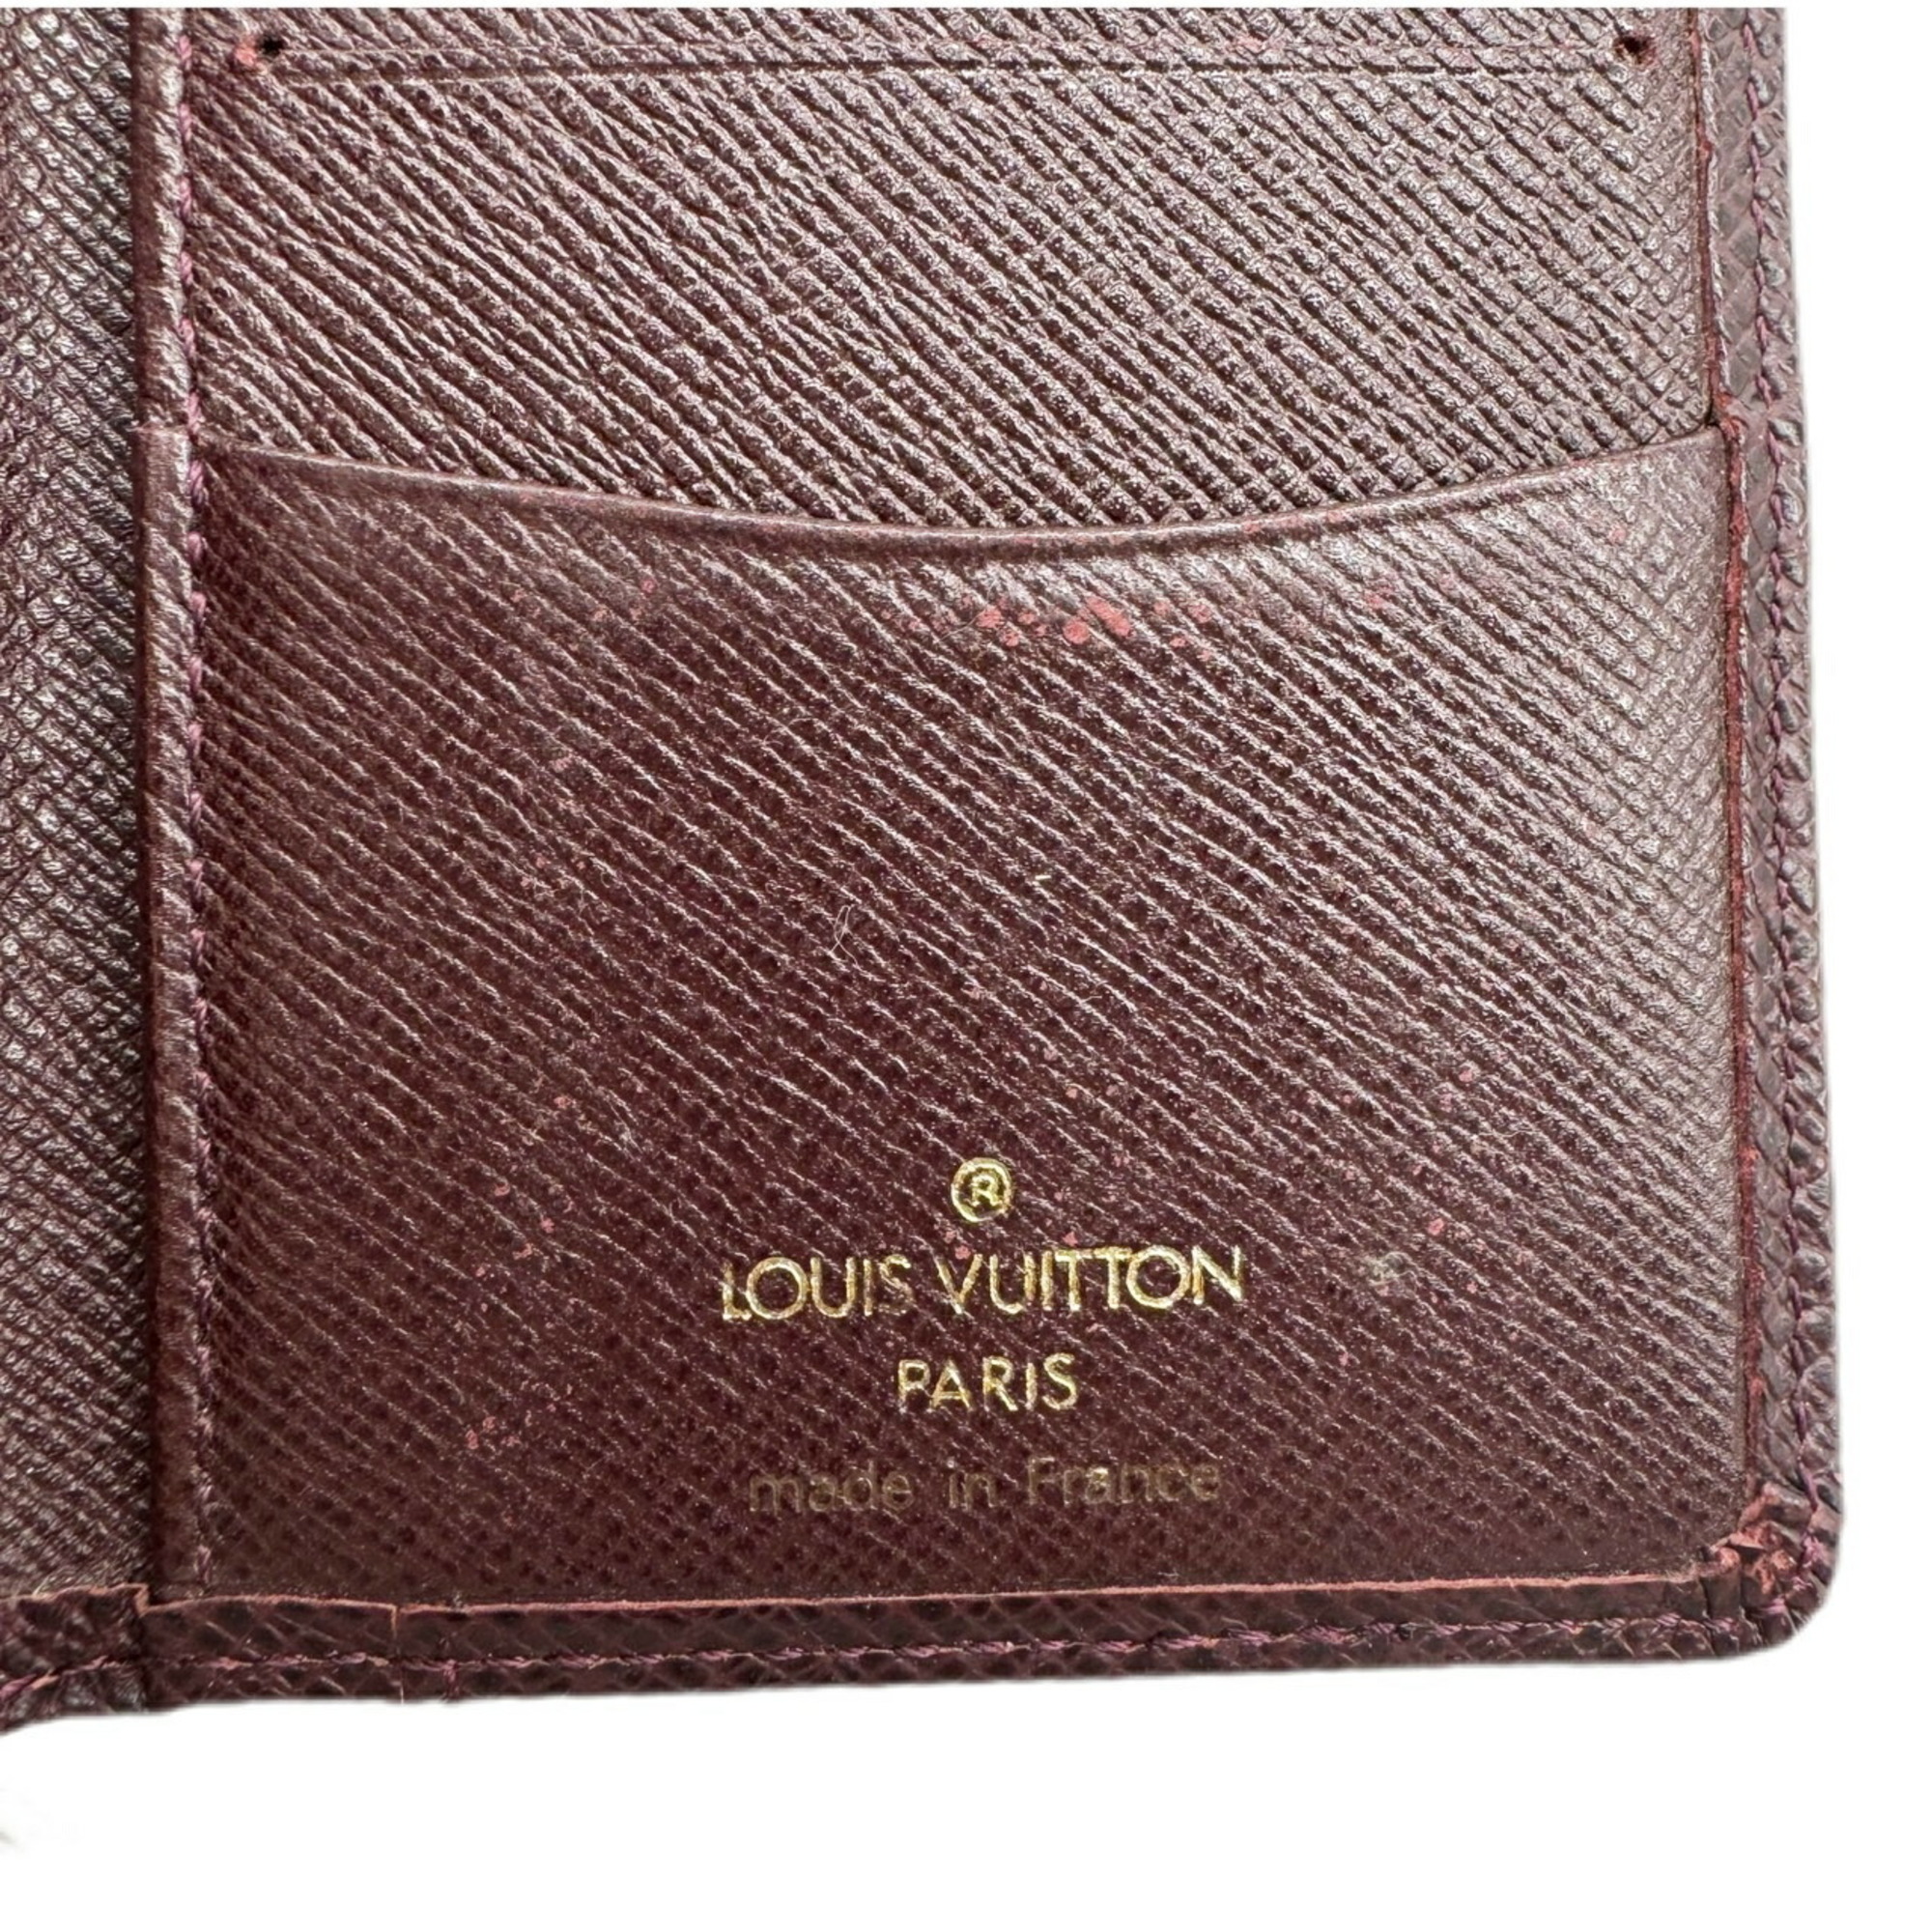 LOUIS VUITTON Louis Vuitton Organizer de Poche Business Card Holder/Card Case Taiga Acajou Reddish Brown M30516 MI1011 Holder Pass Men's Women's